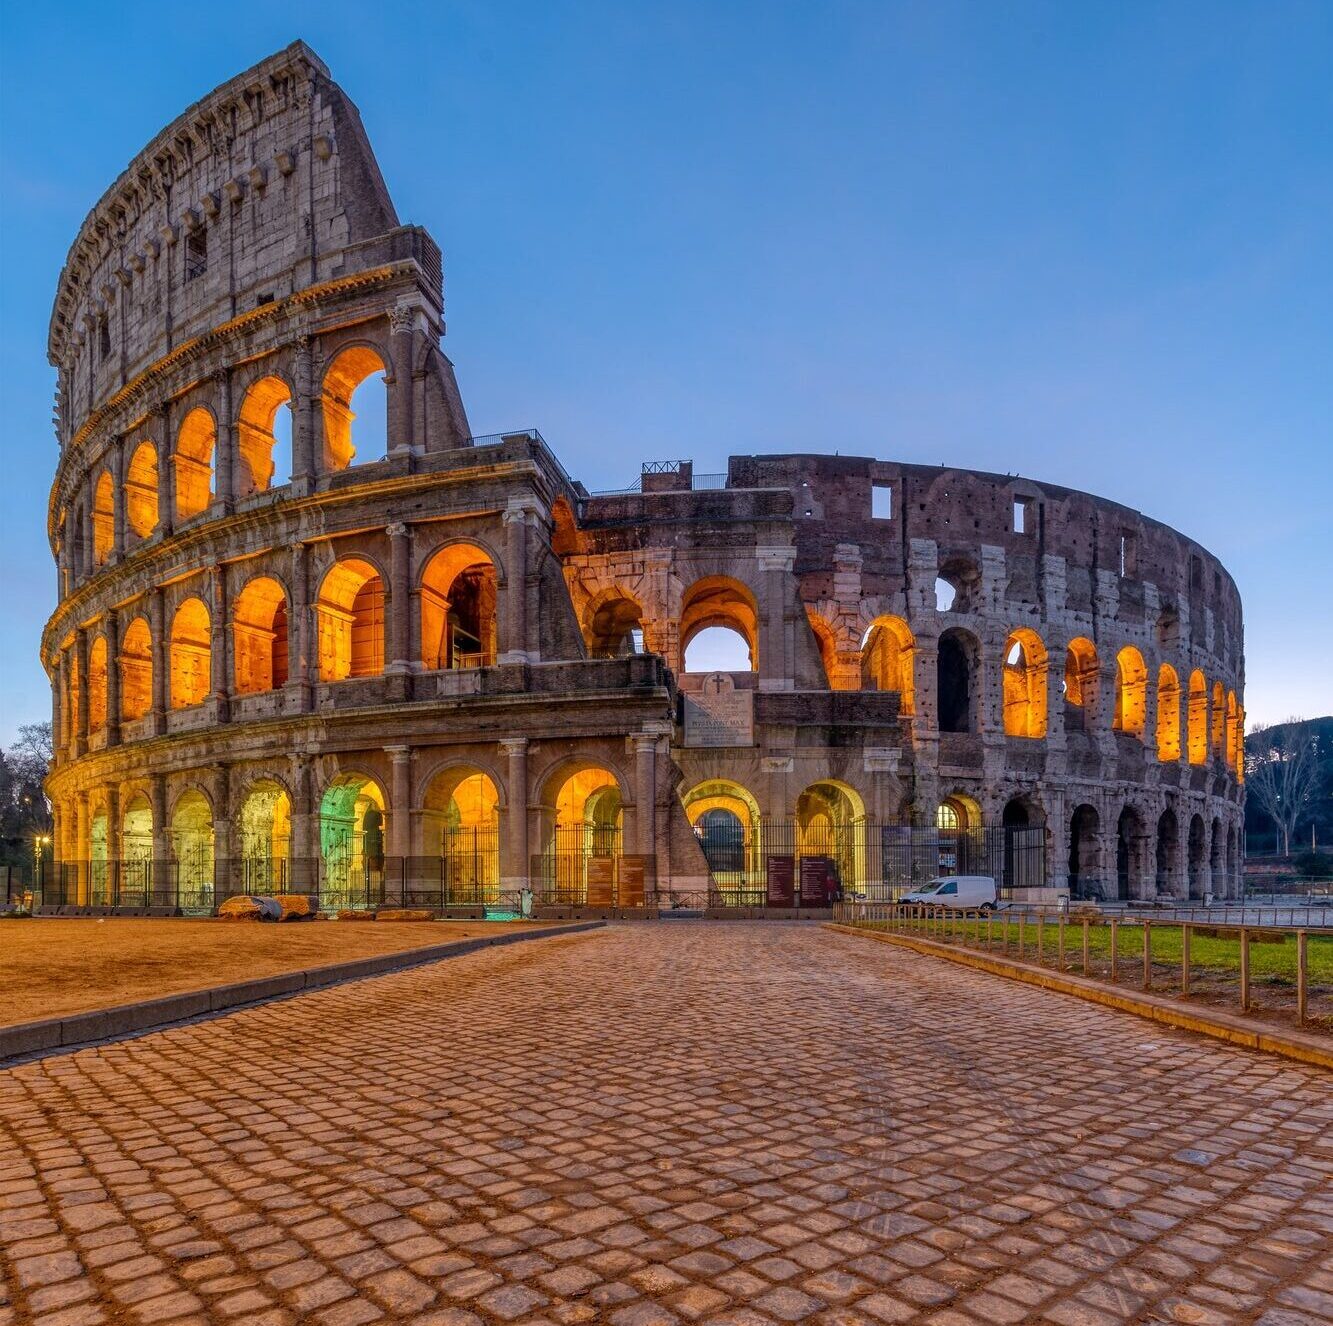 The famous Colosseum